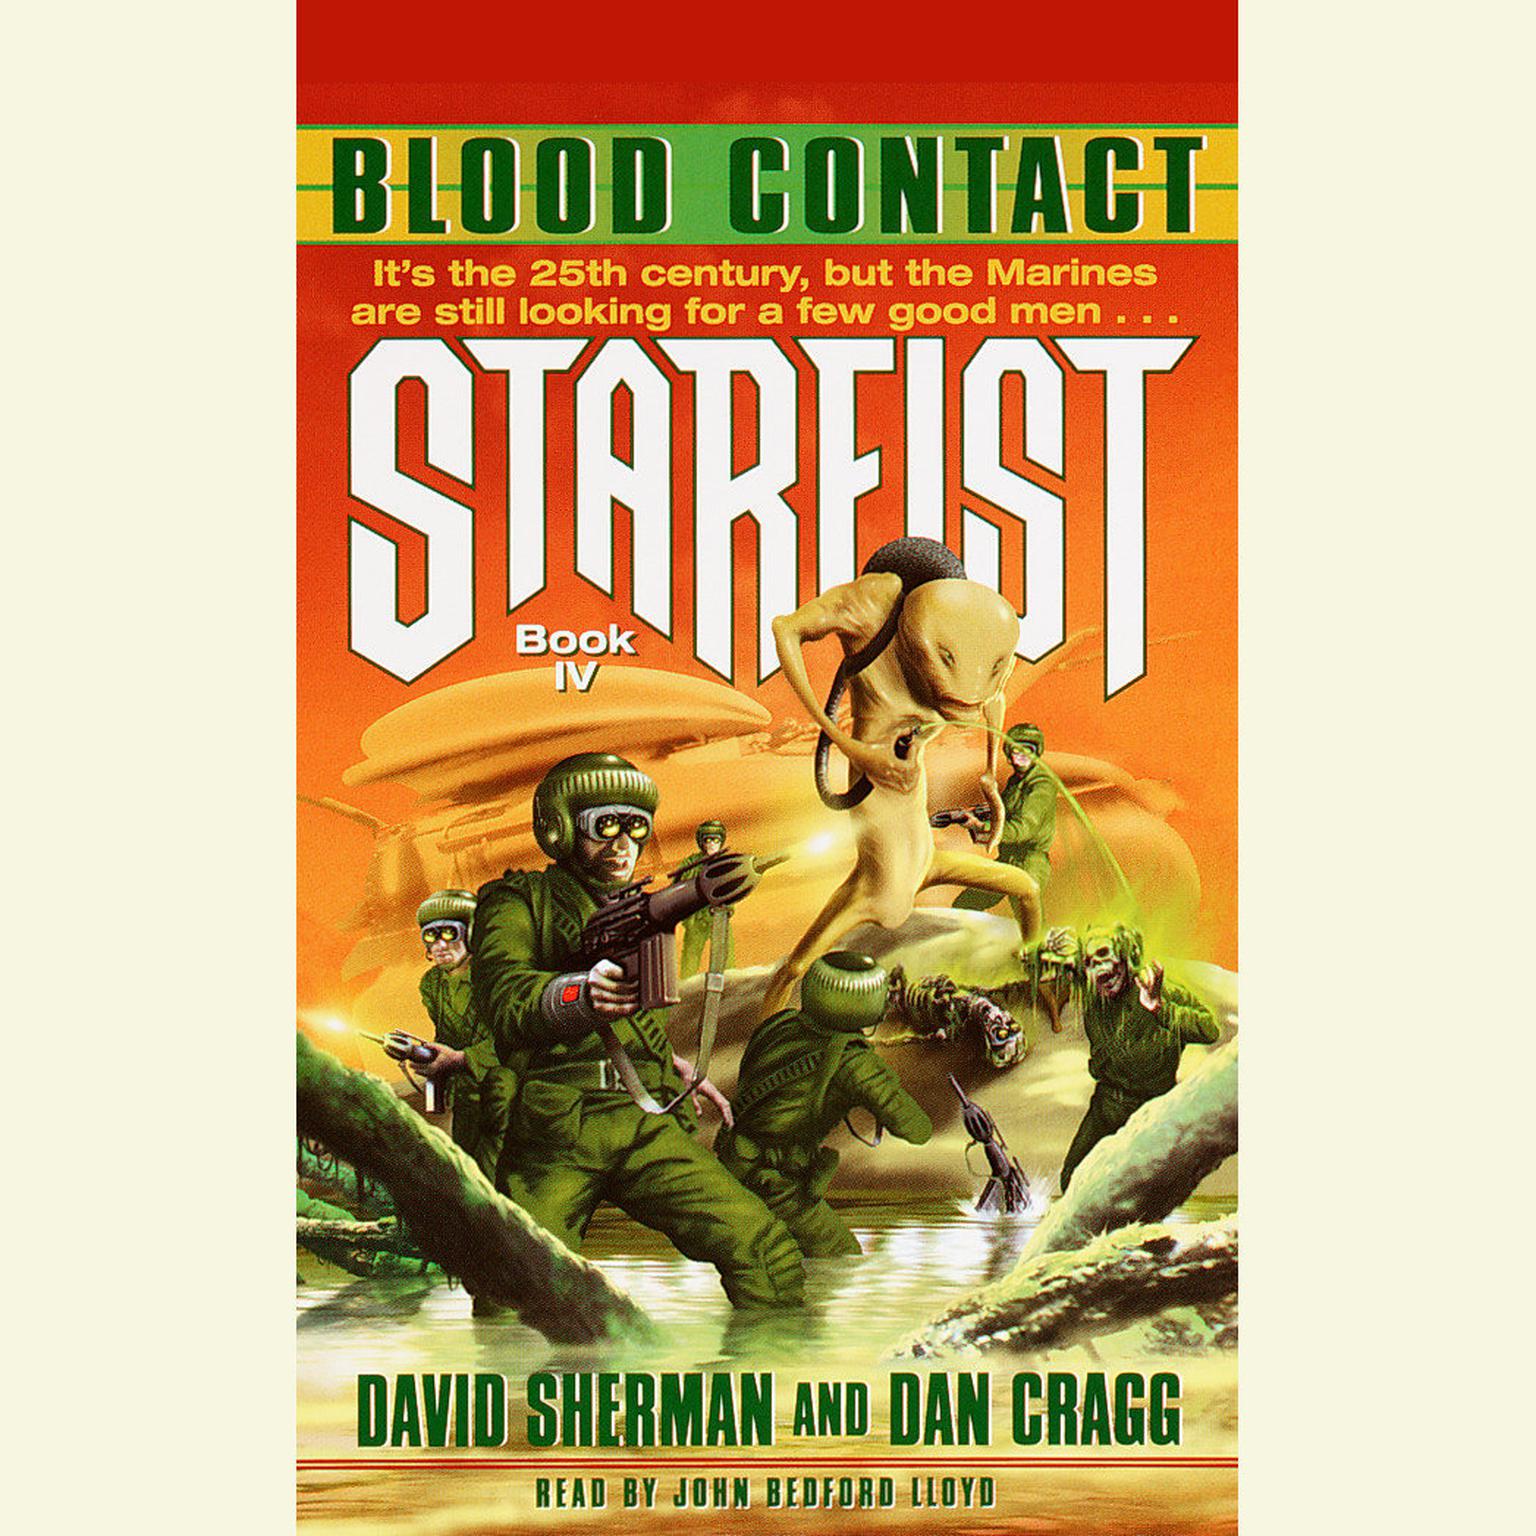 Starfist: Blood Contact (Abridged): Book IV Audiobook, by David Sherman